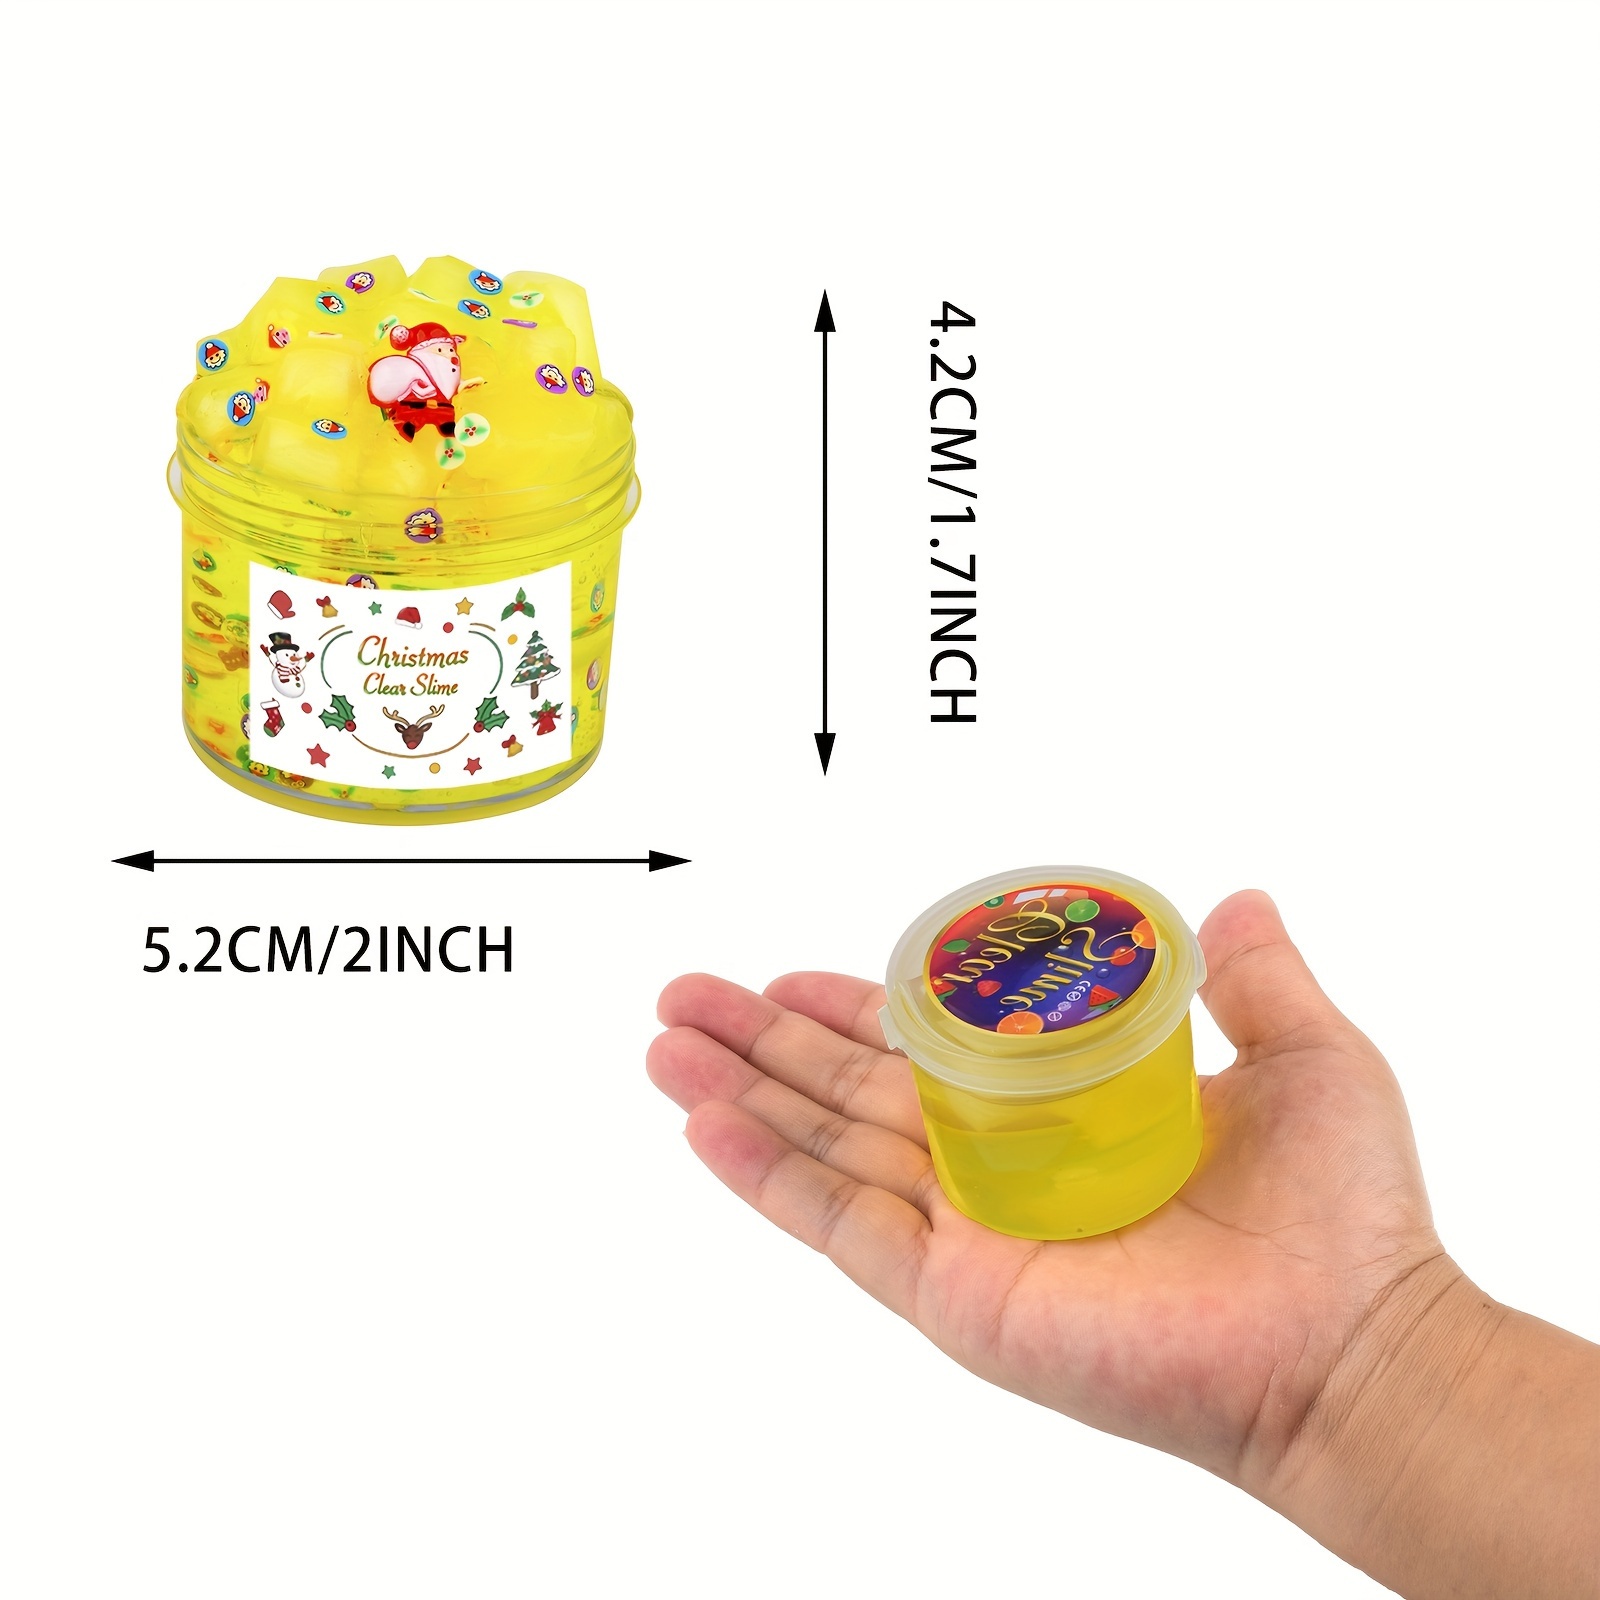  Kit de slime transparente de juguetes para niñas: cubo